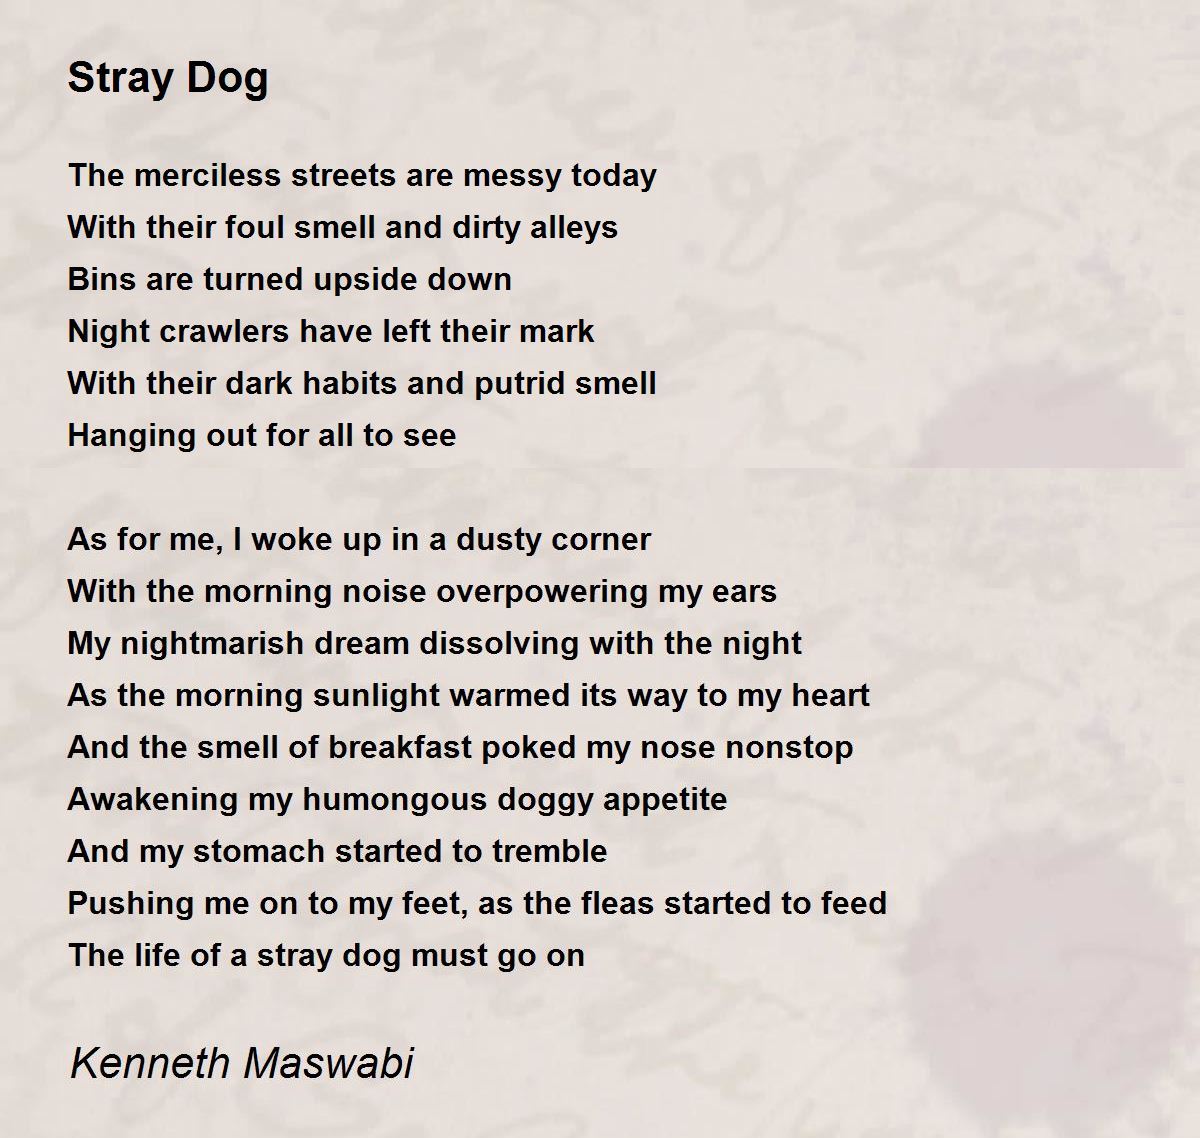 essay on a stray dog